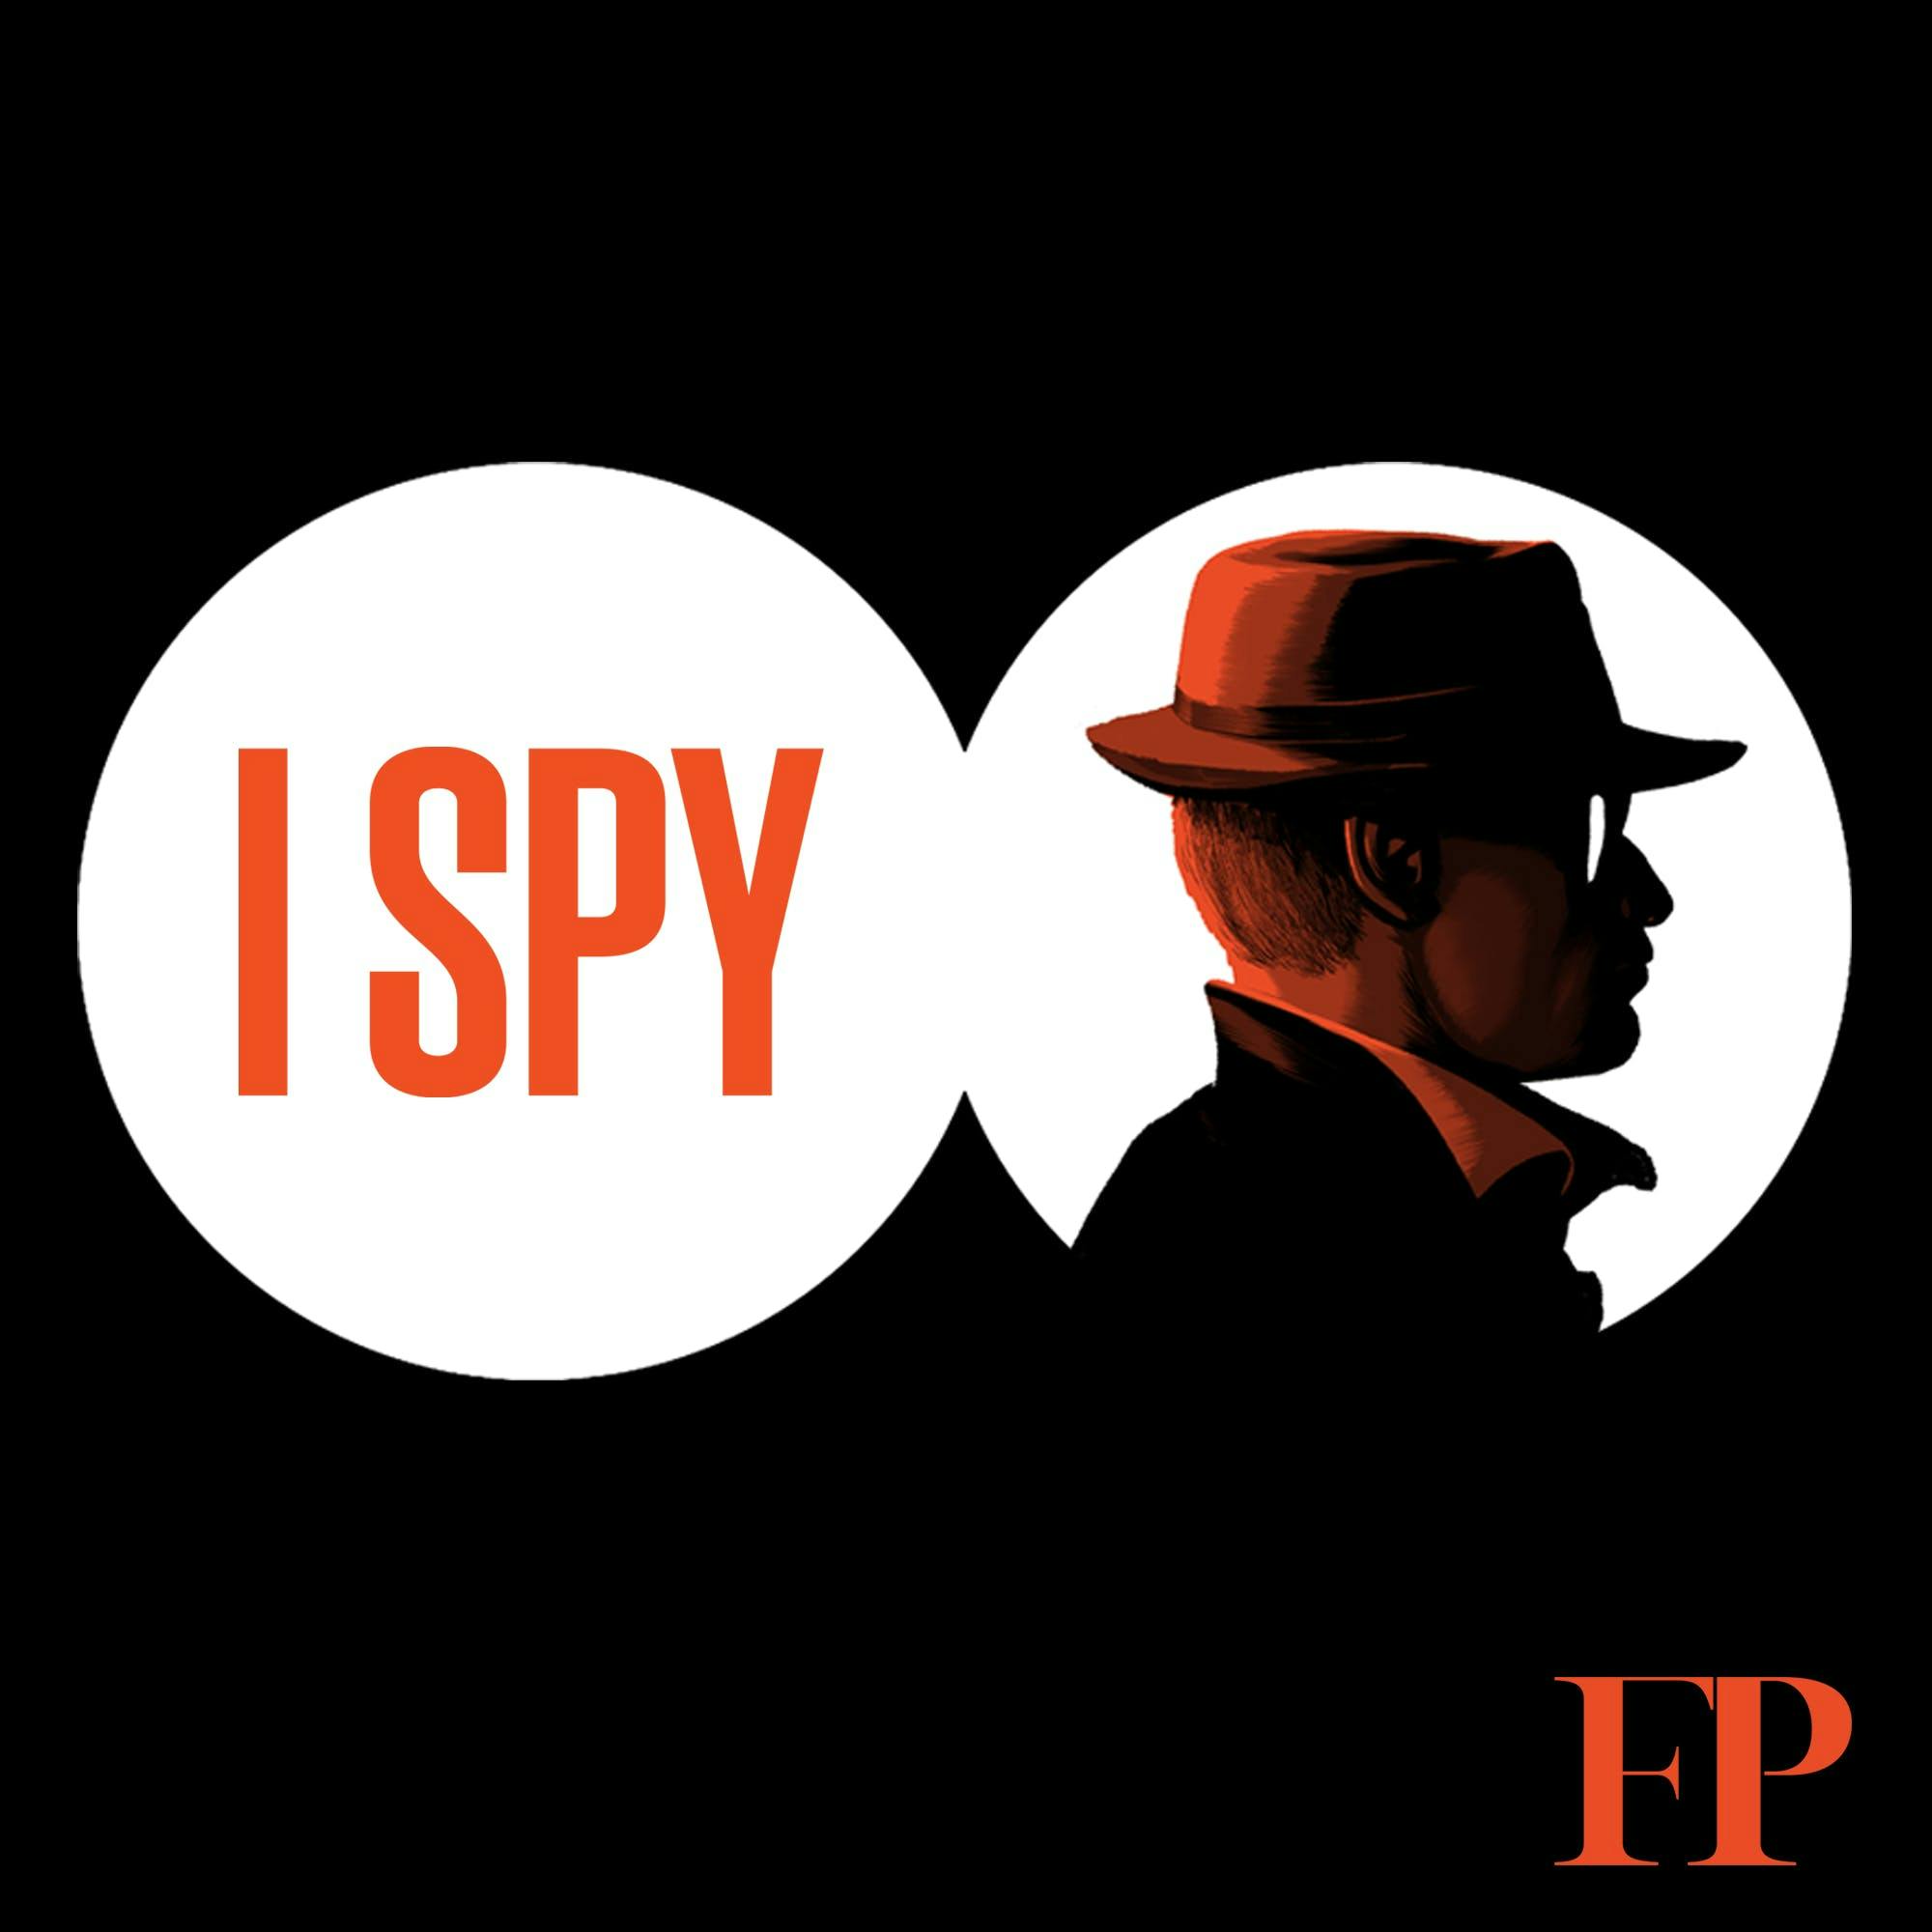 I Spy:Foreign Policy